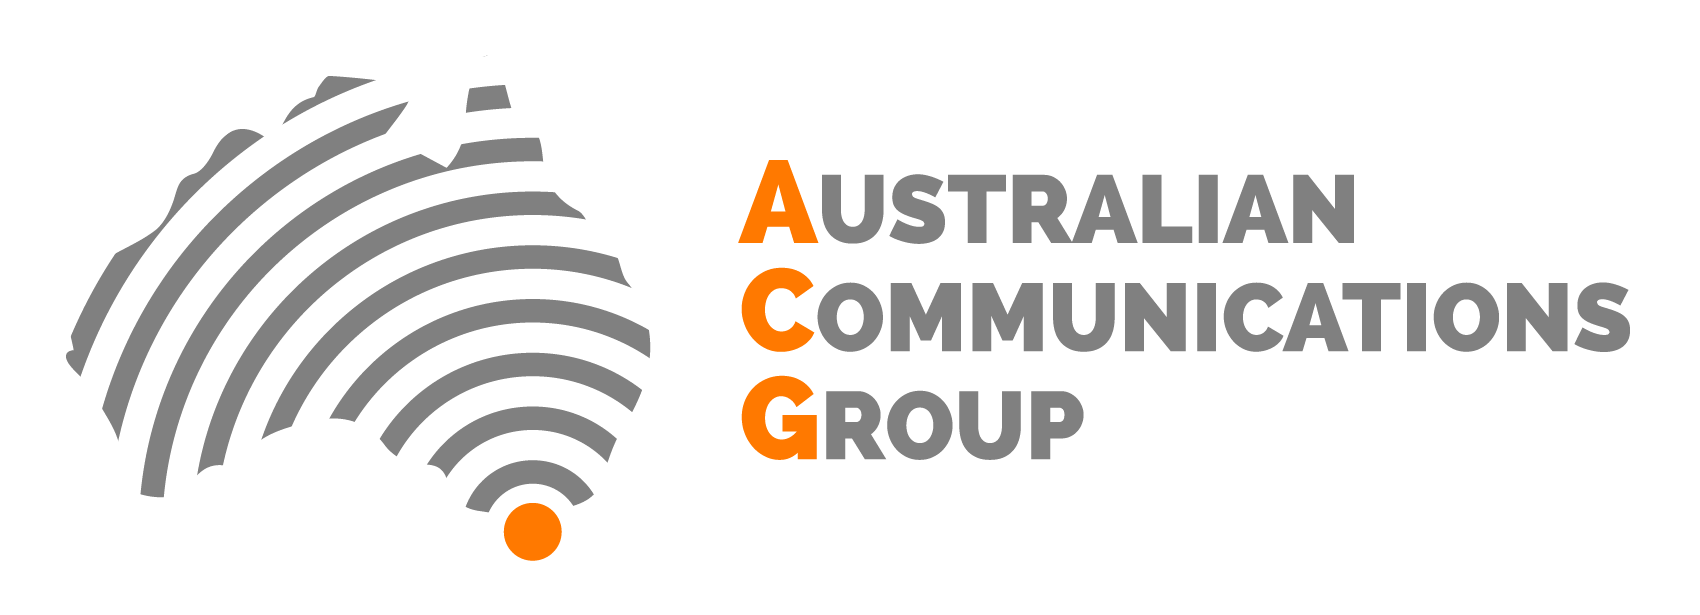 Australian Communications Group